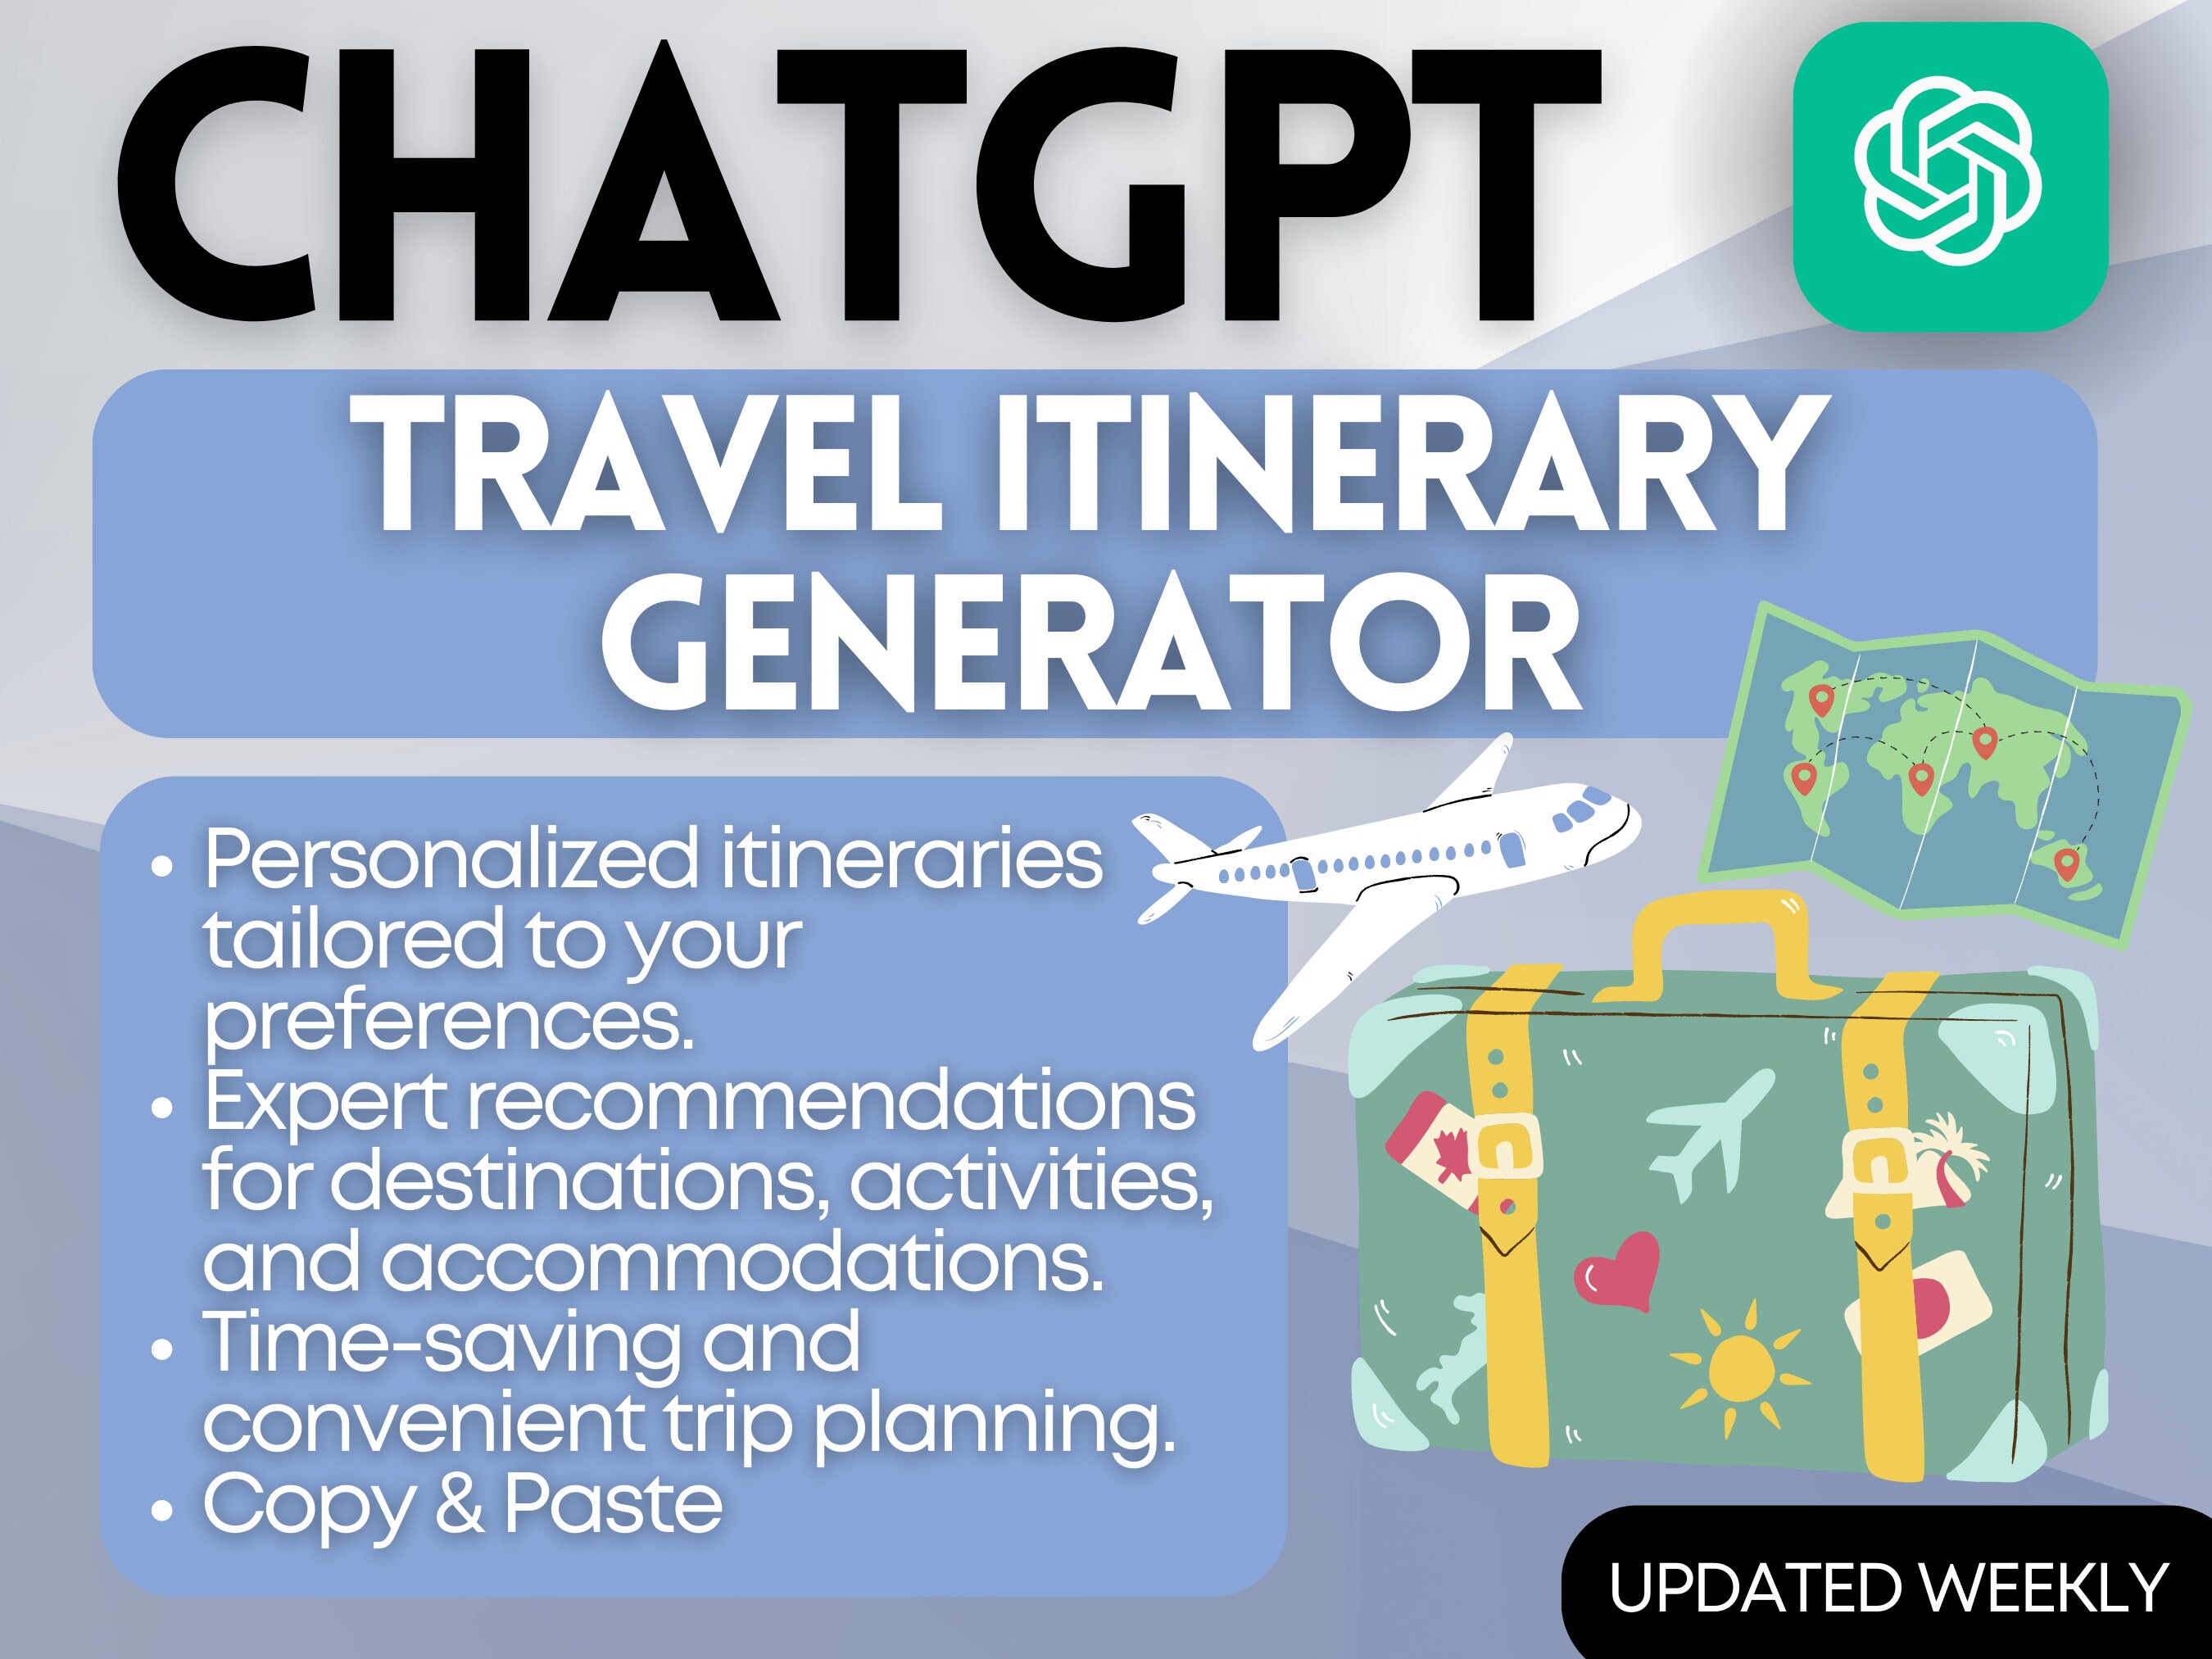 chatgpt travel planner